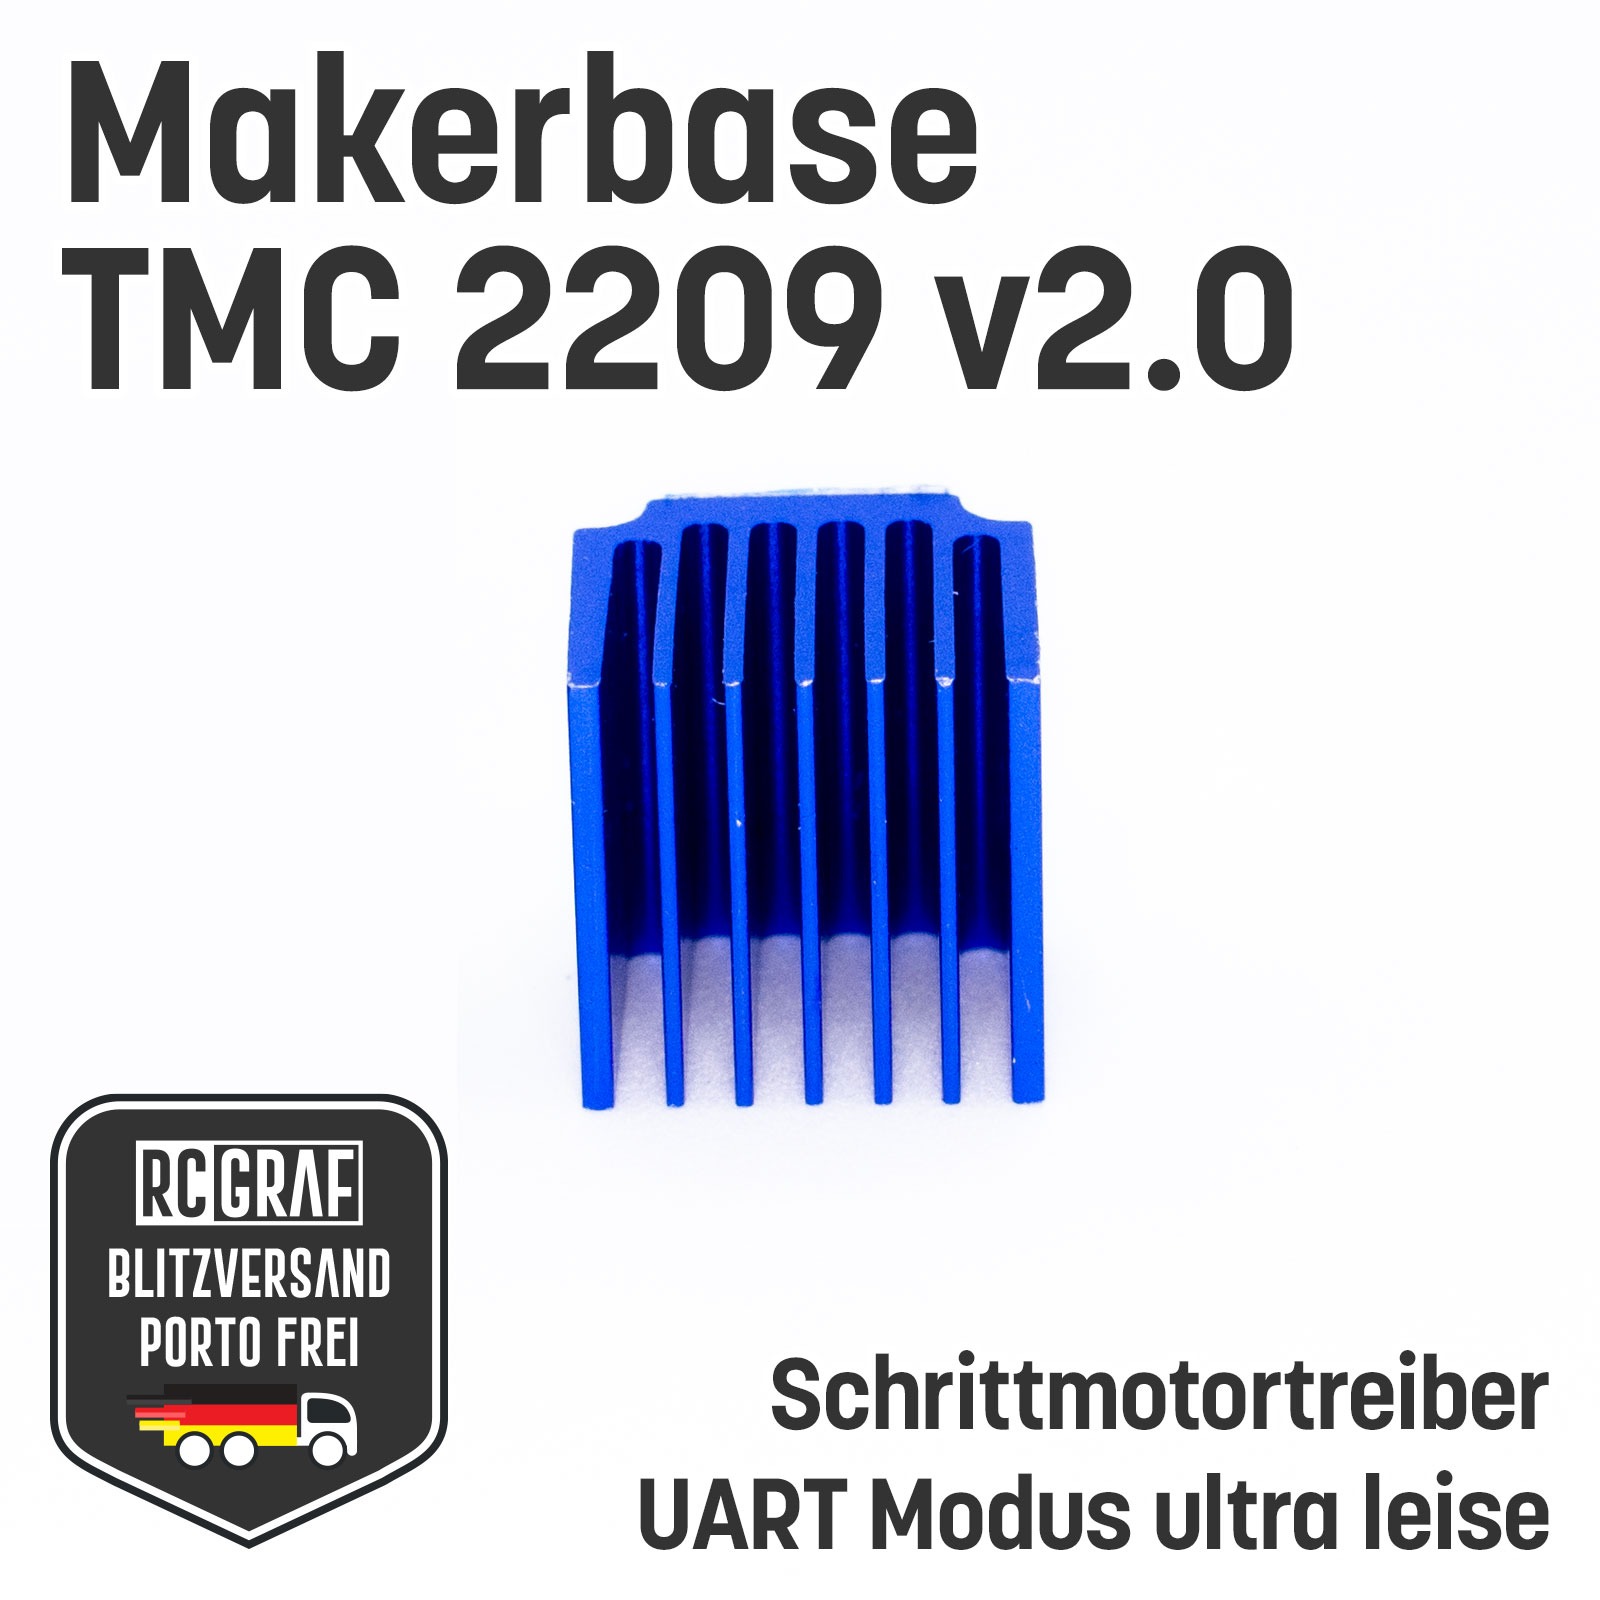 Makerbase TMC2209 V2.0 Schrittmotortreiber UART Modus ultra leise 5